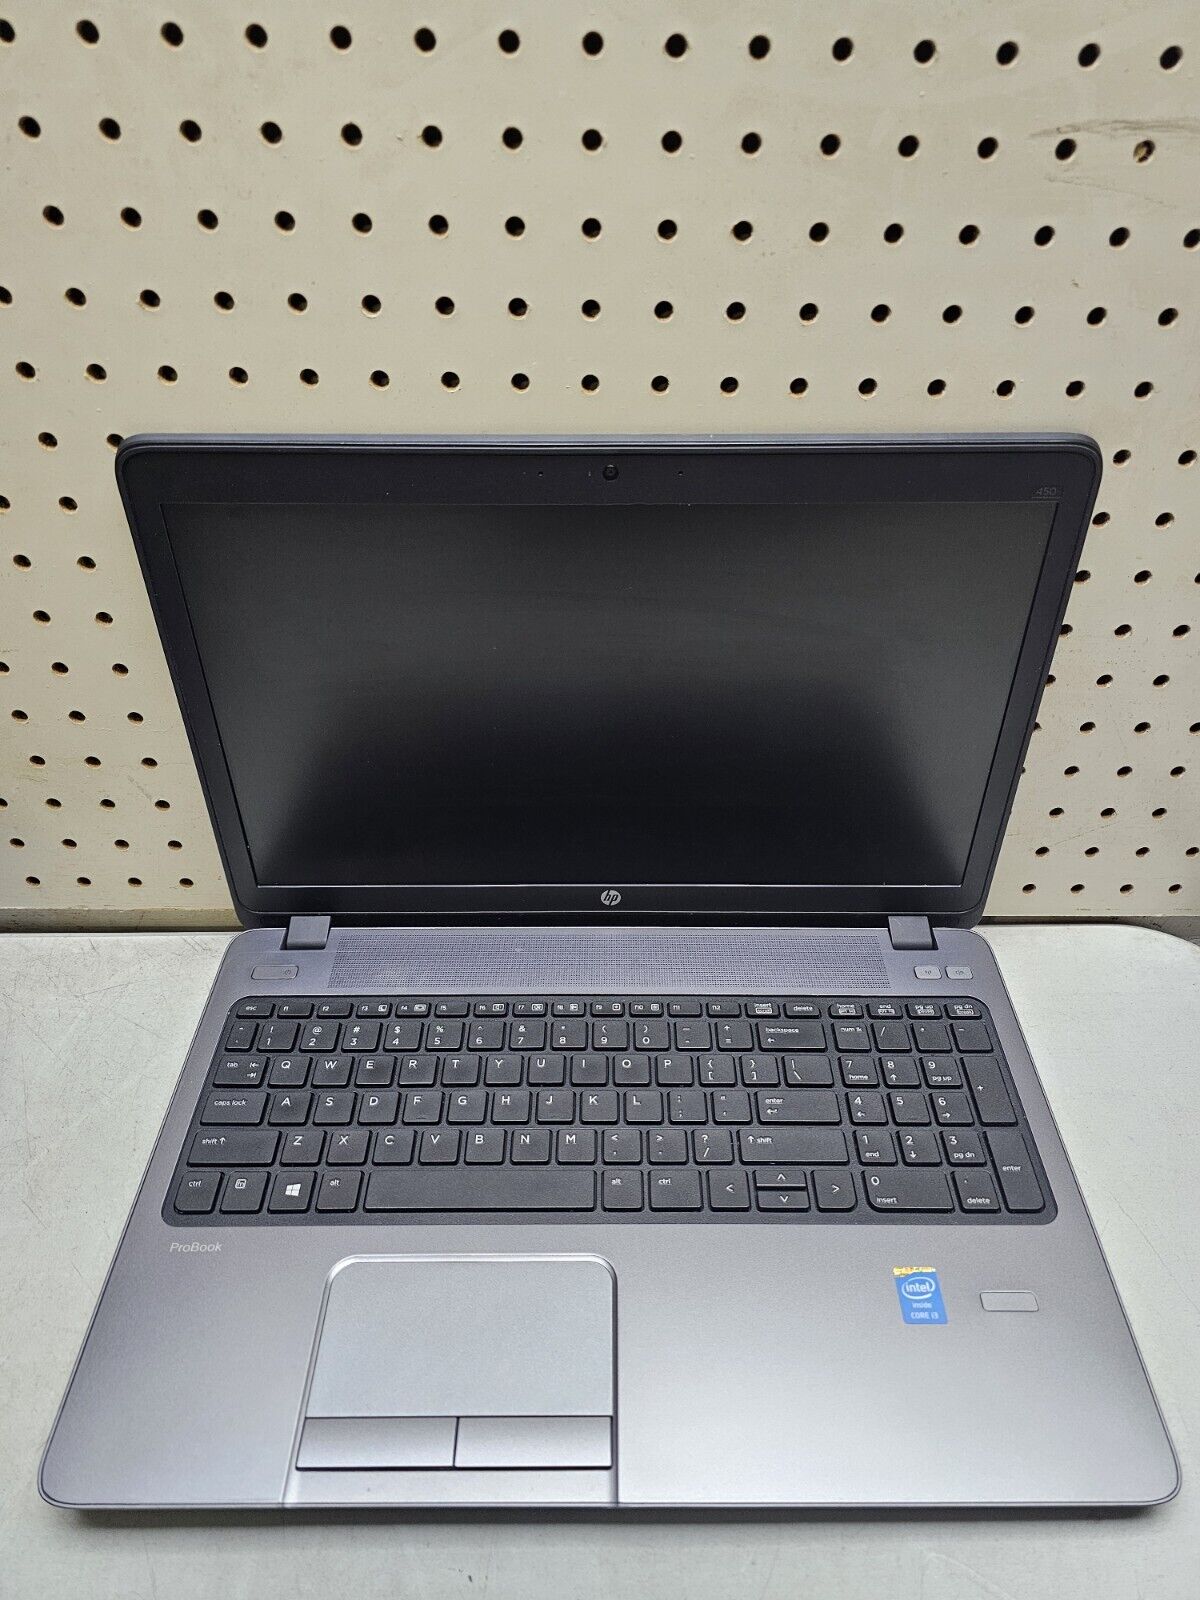 Lot of Seven (7) HP ProBook 450 G1 Laptops - i3-4000M - 8GB RAM - 500GB HDD-READ